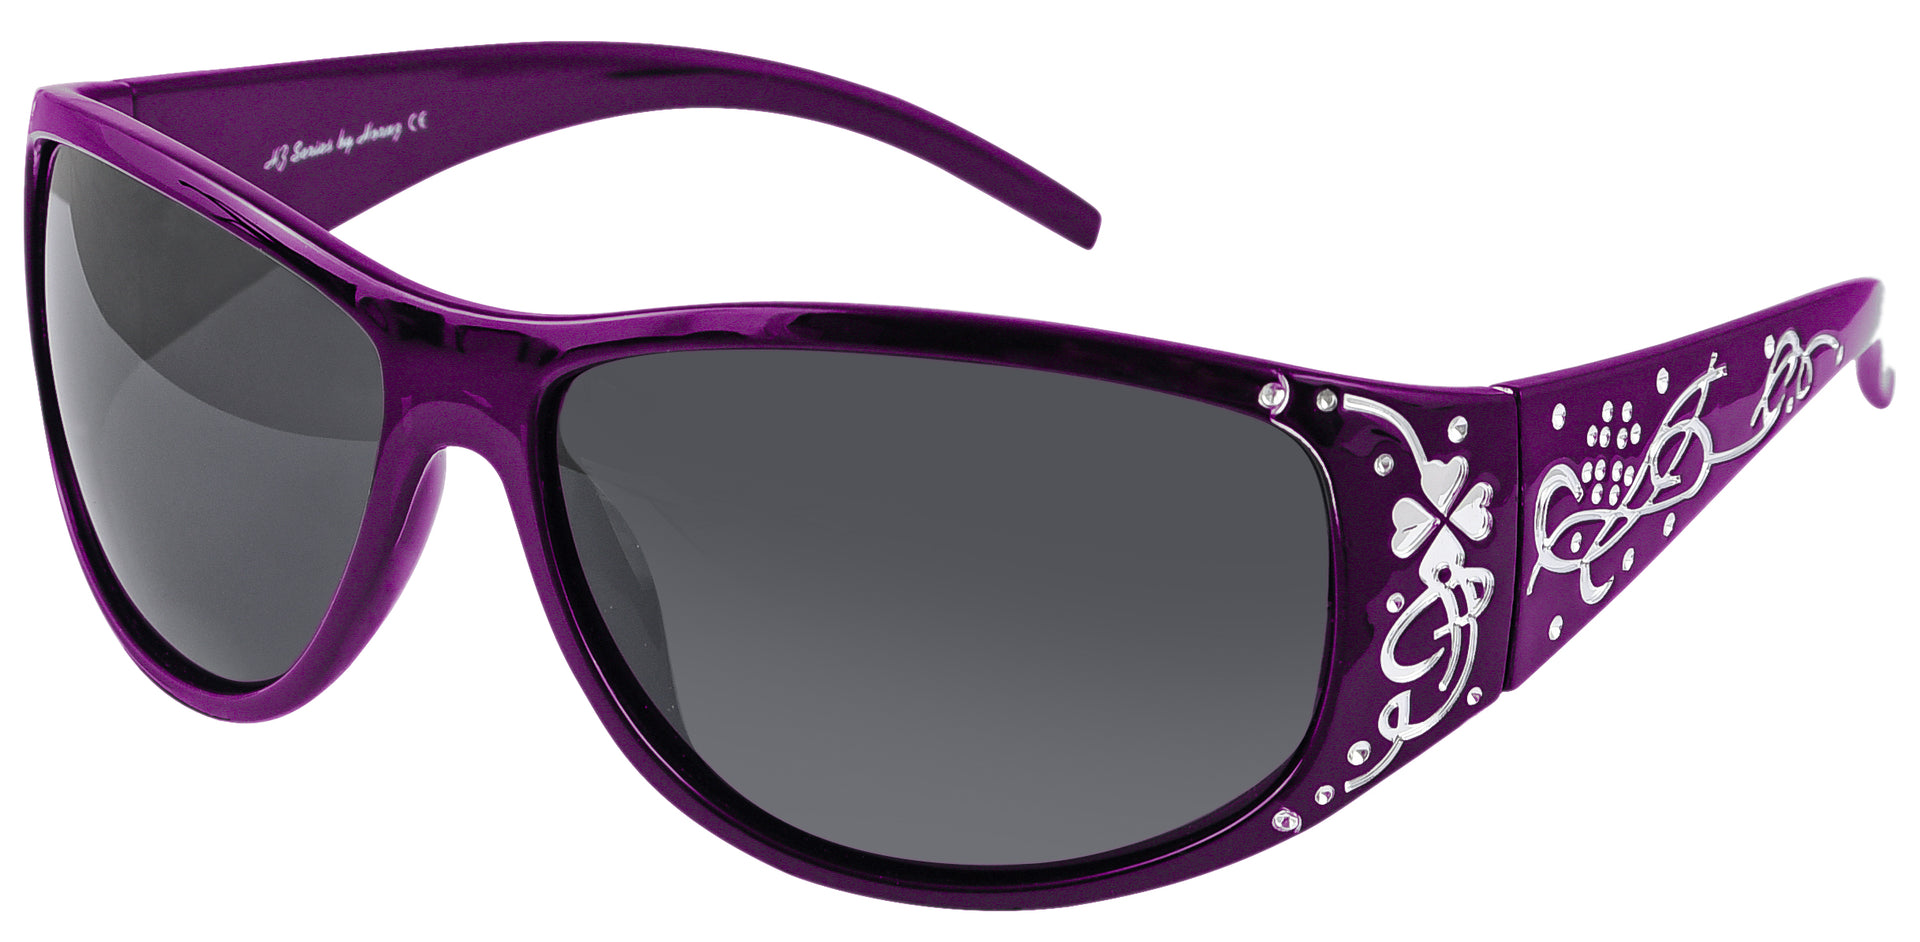 Polarized Sunglasses for Women - Premium Fashion Sunglasses